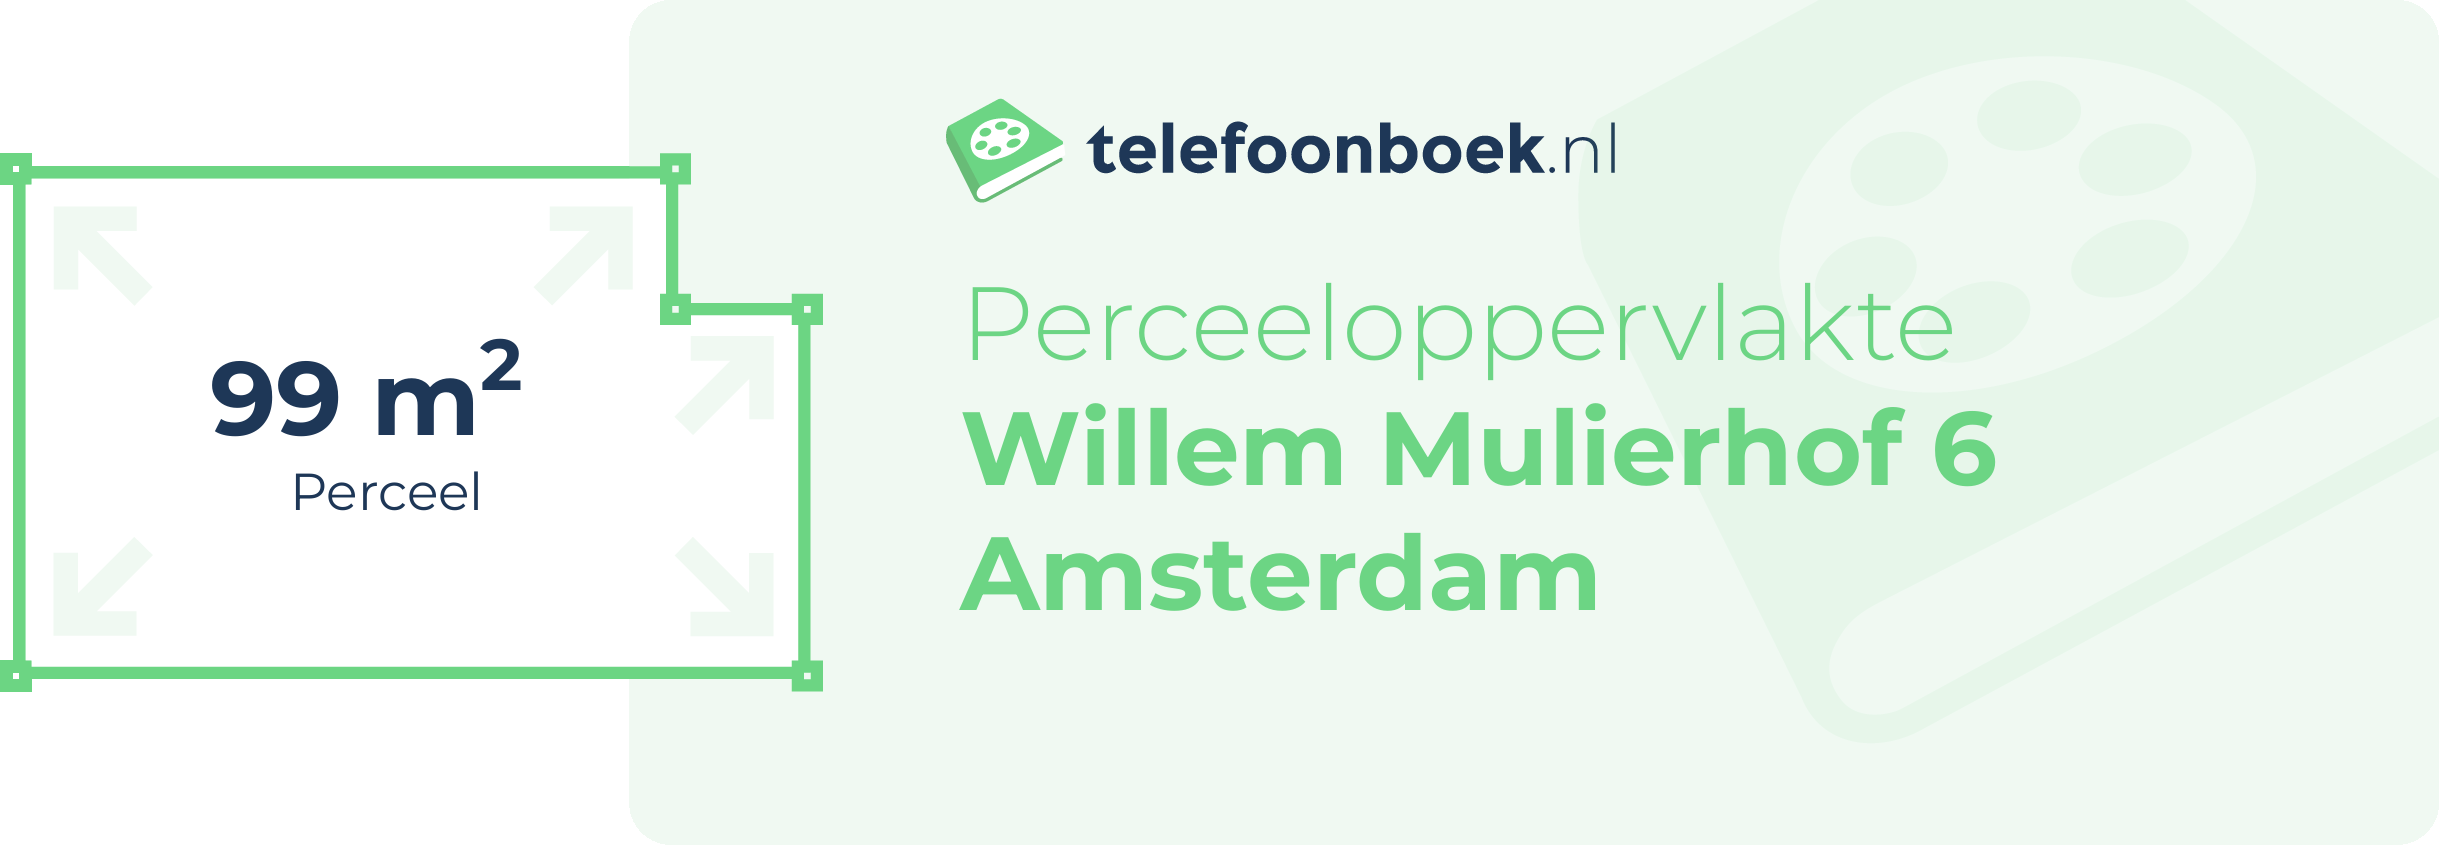 Perceeloppervlakte Willem Mulierhof 6 Amsterdam